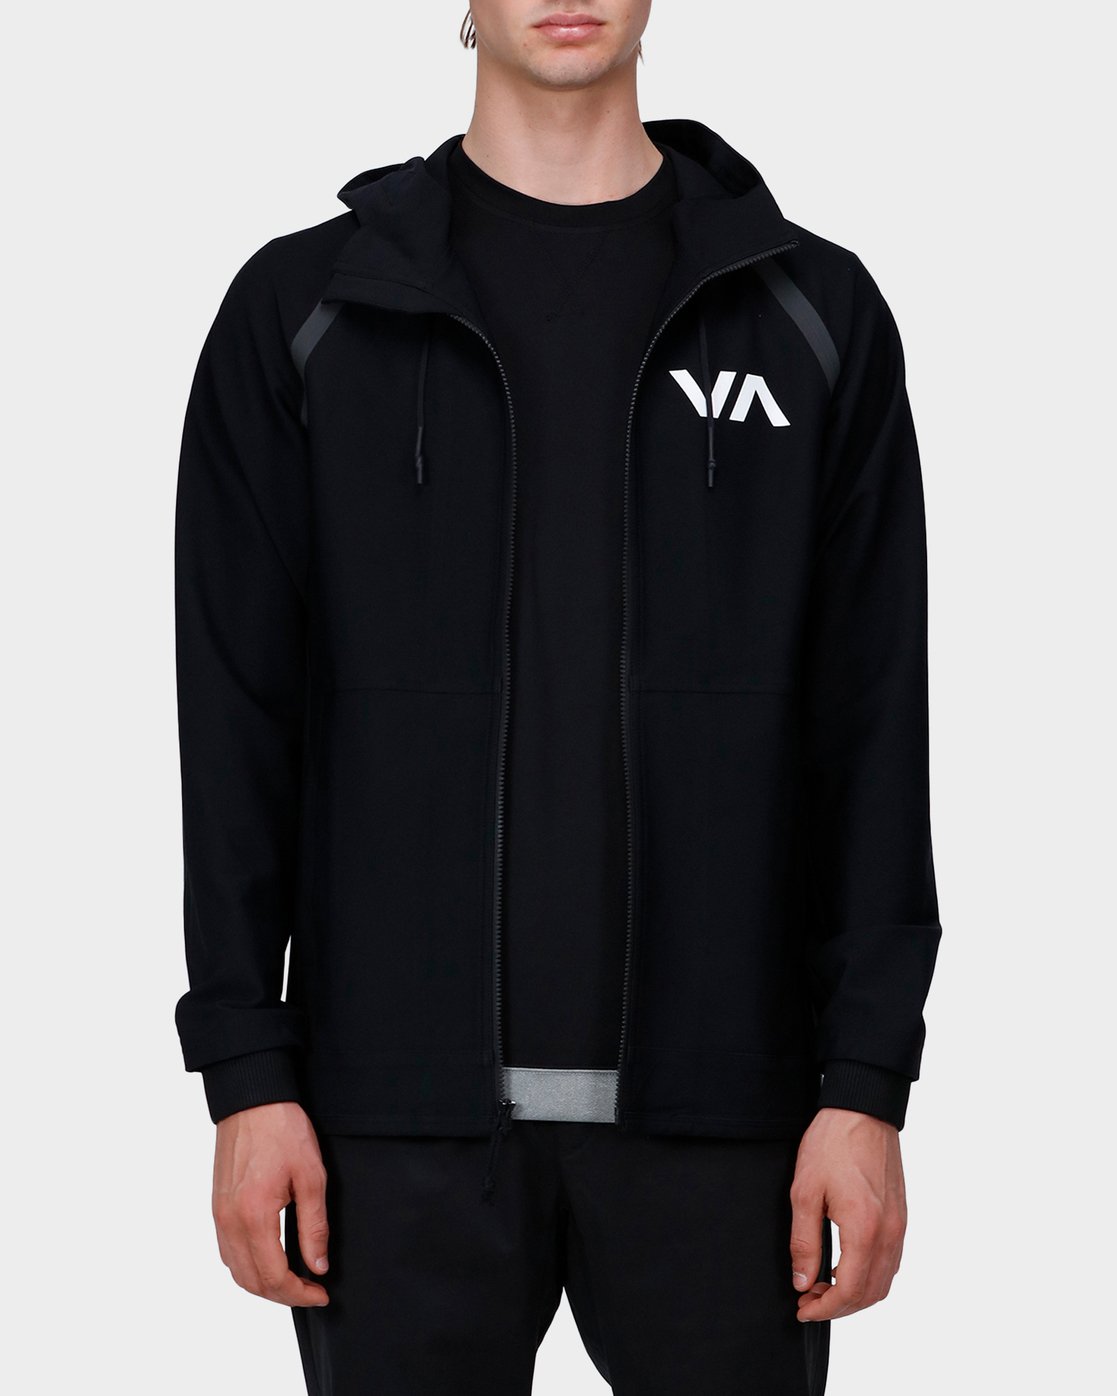 RVCA Grappler Jacket